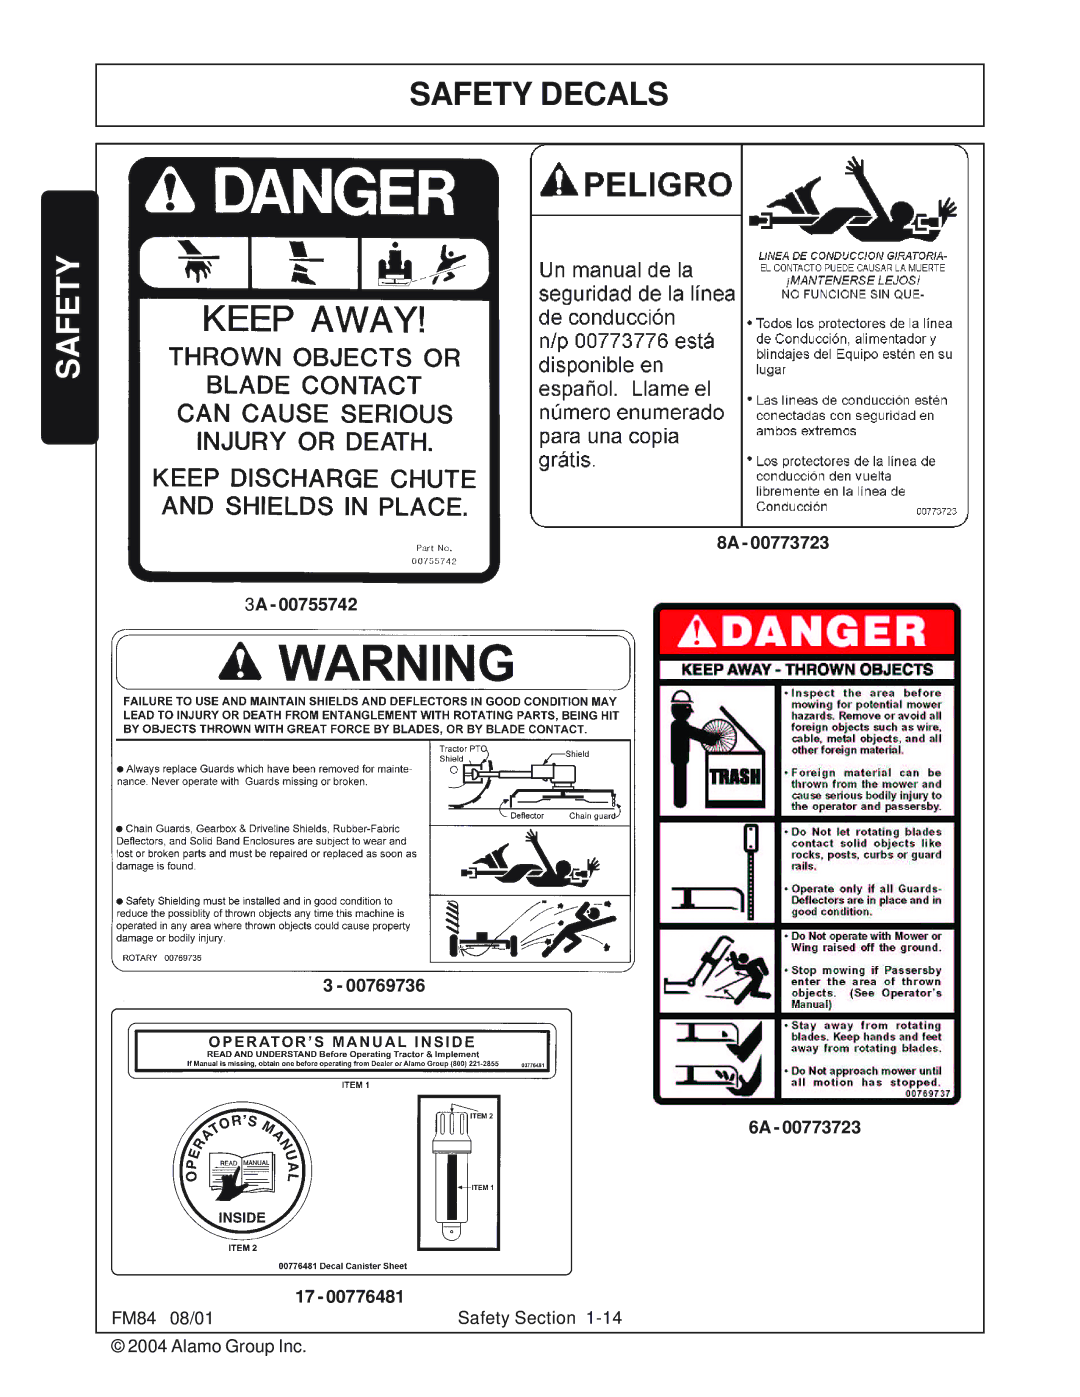 Servis-Rhino manual FM84 08/01 Safety Section Alamo Group Inc 